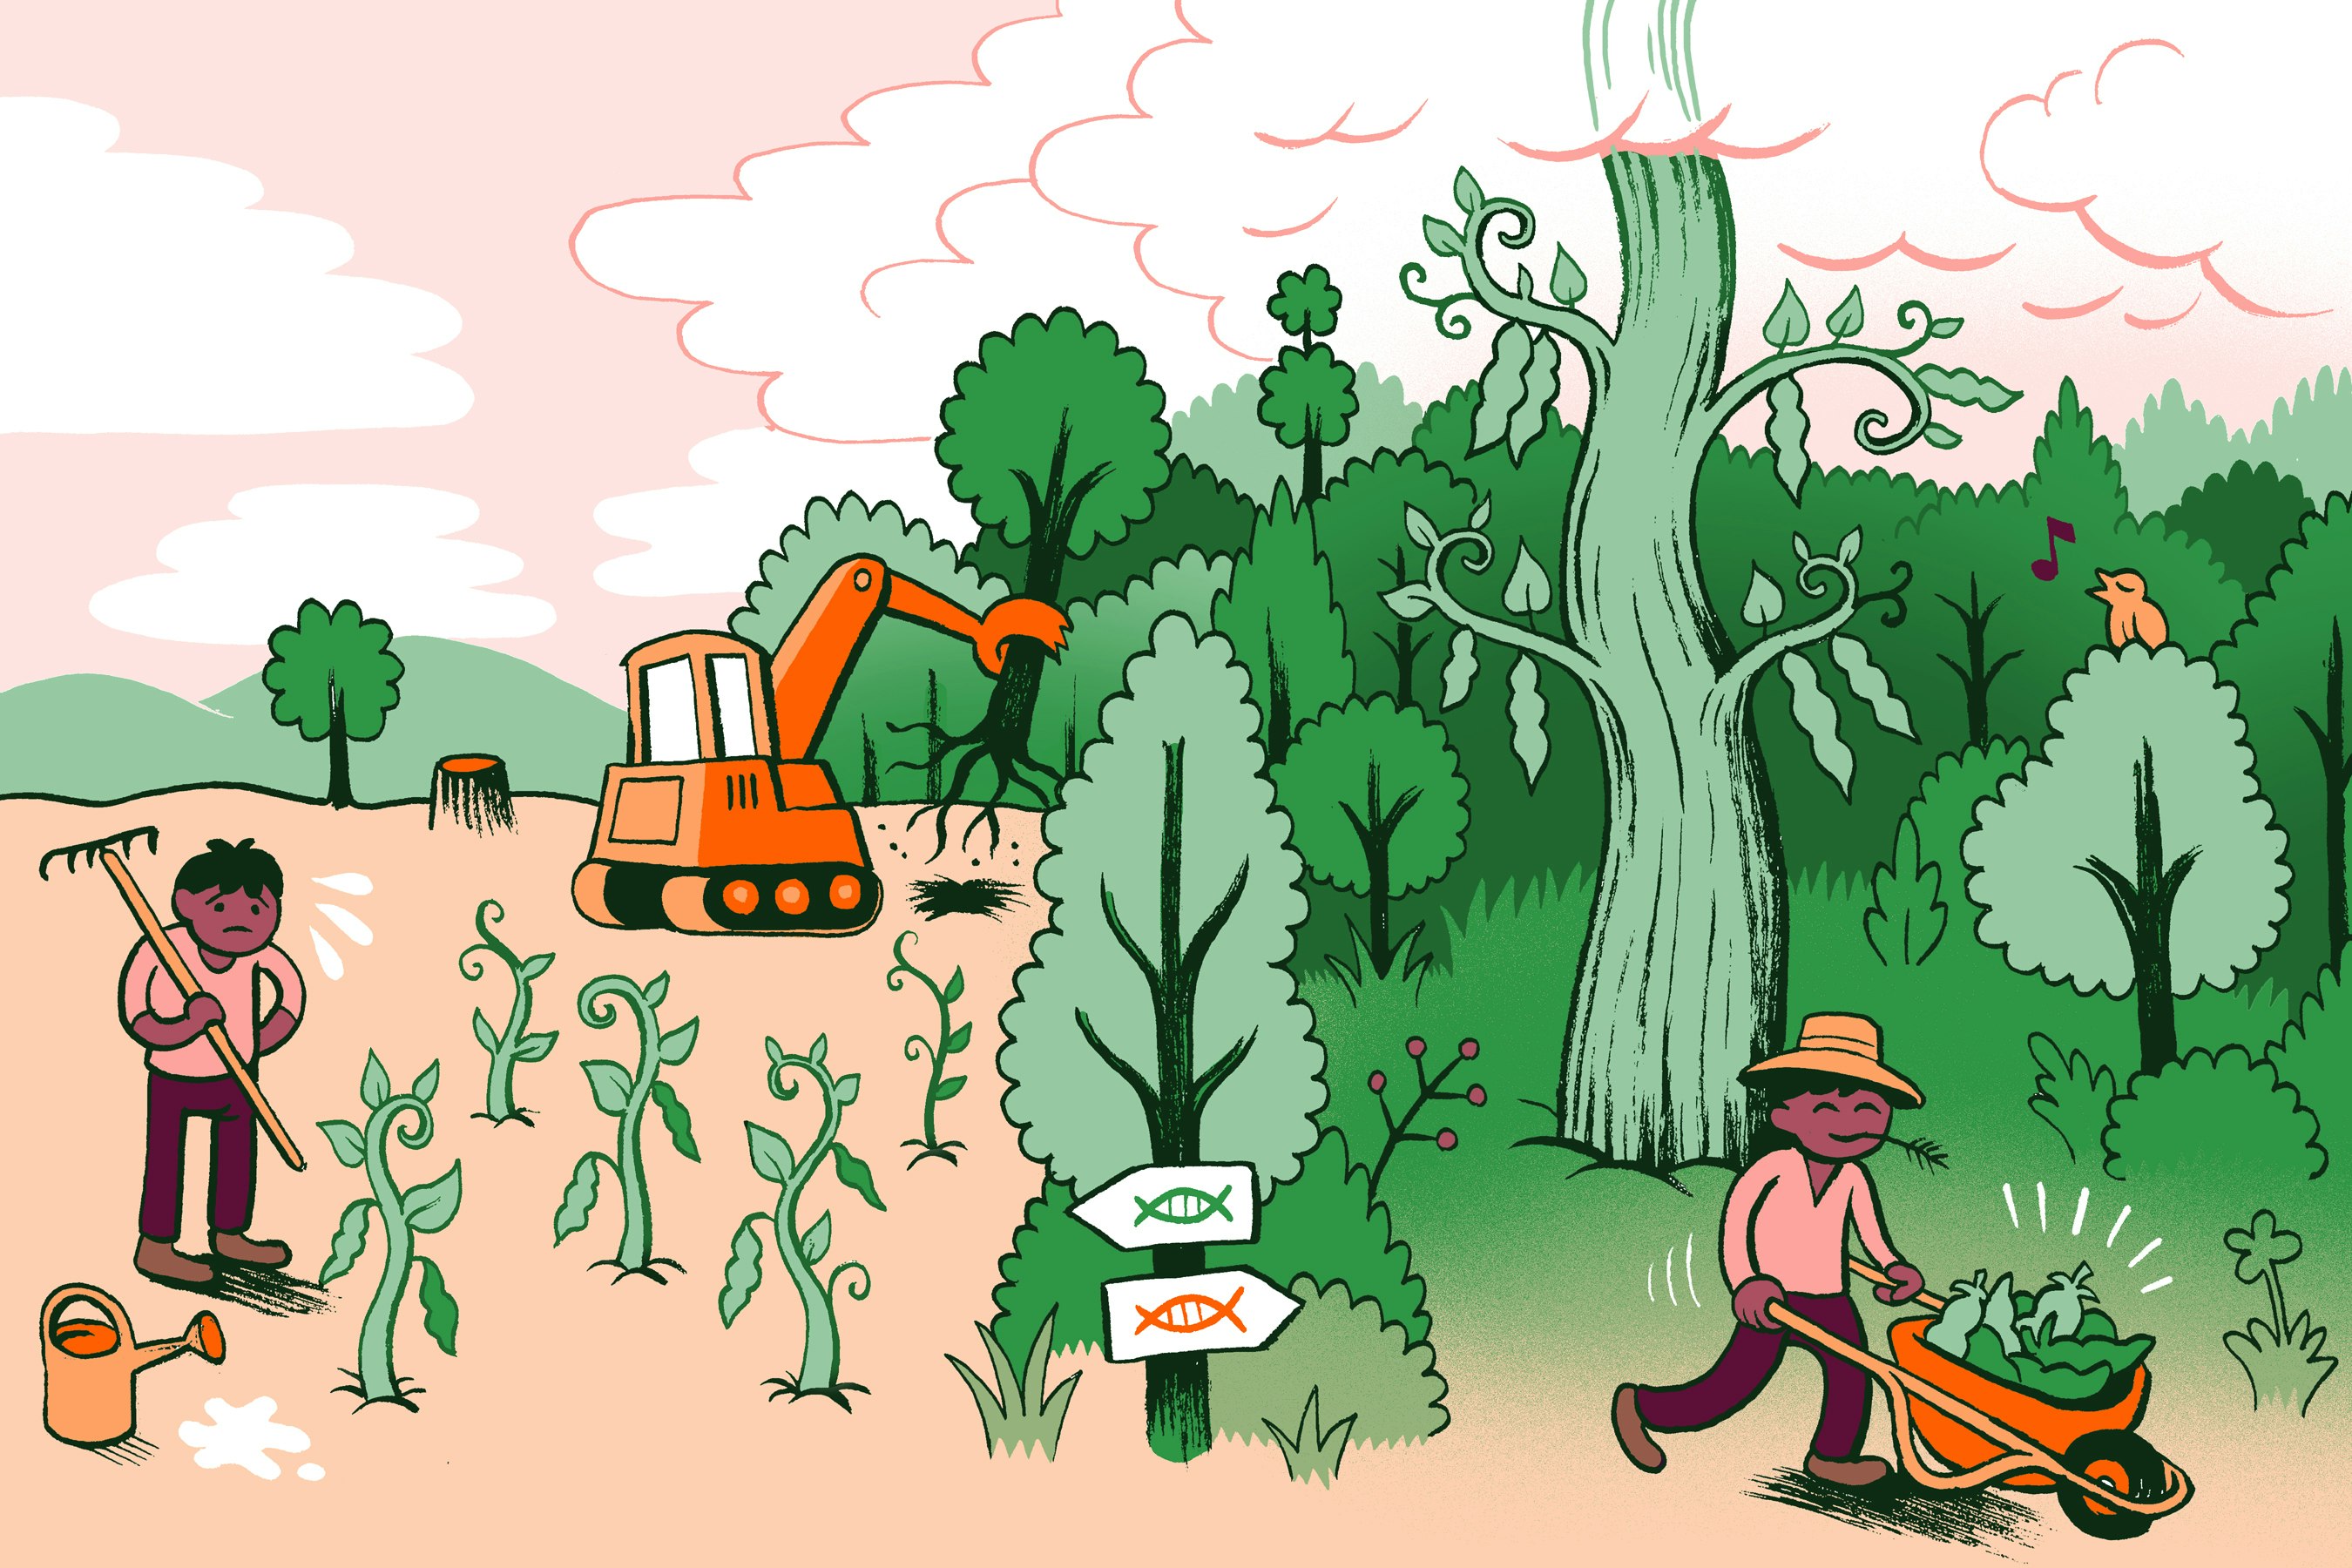 GMO illustration with farmers